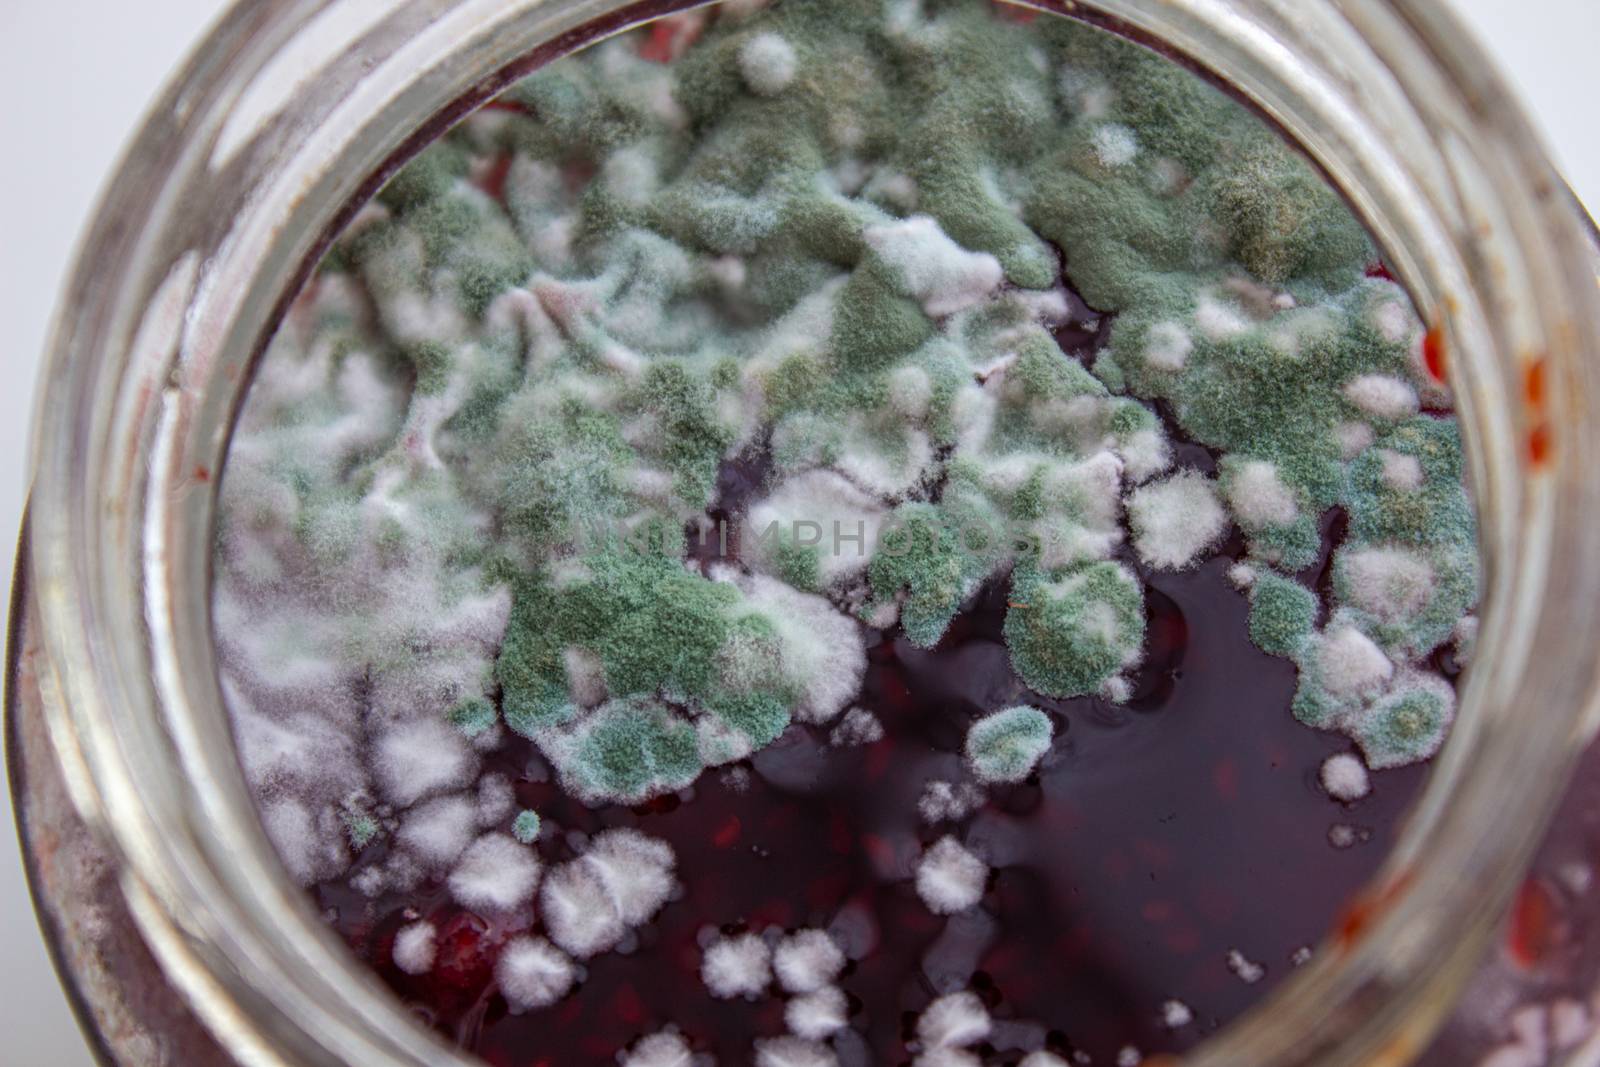 Mold in a jar of jam. Hazardous to health. Mold